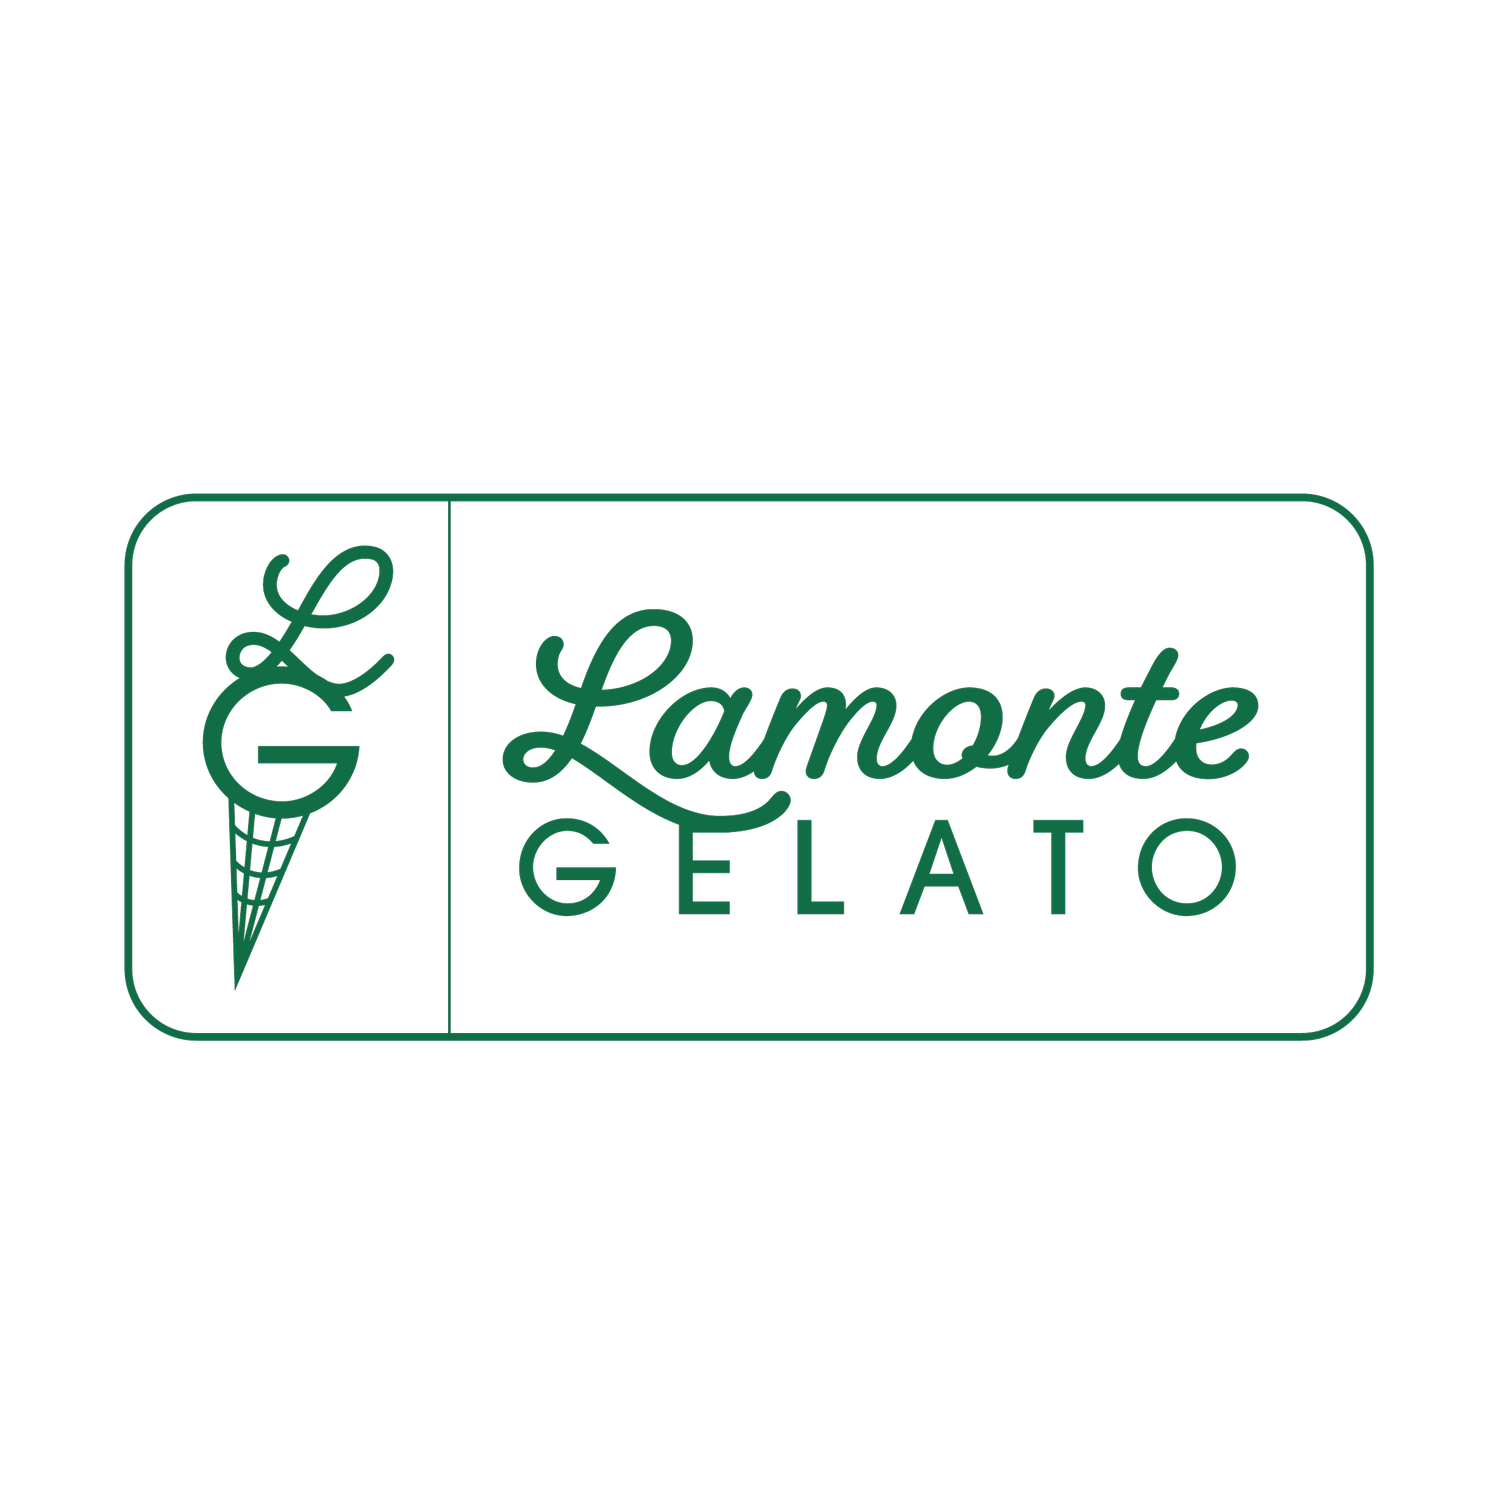 Lamonte Gelato